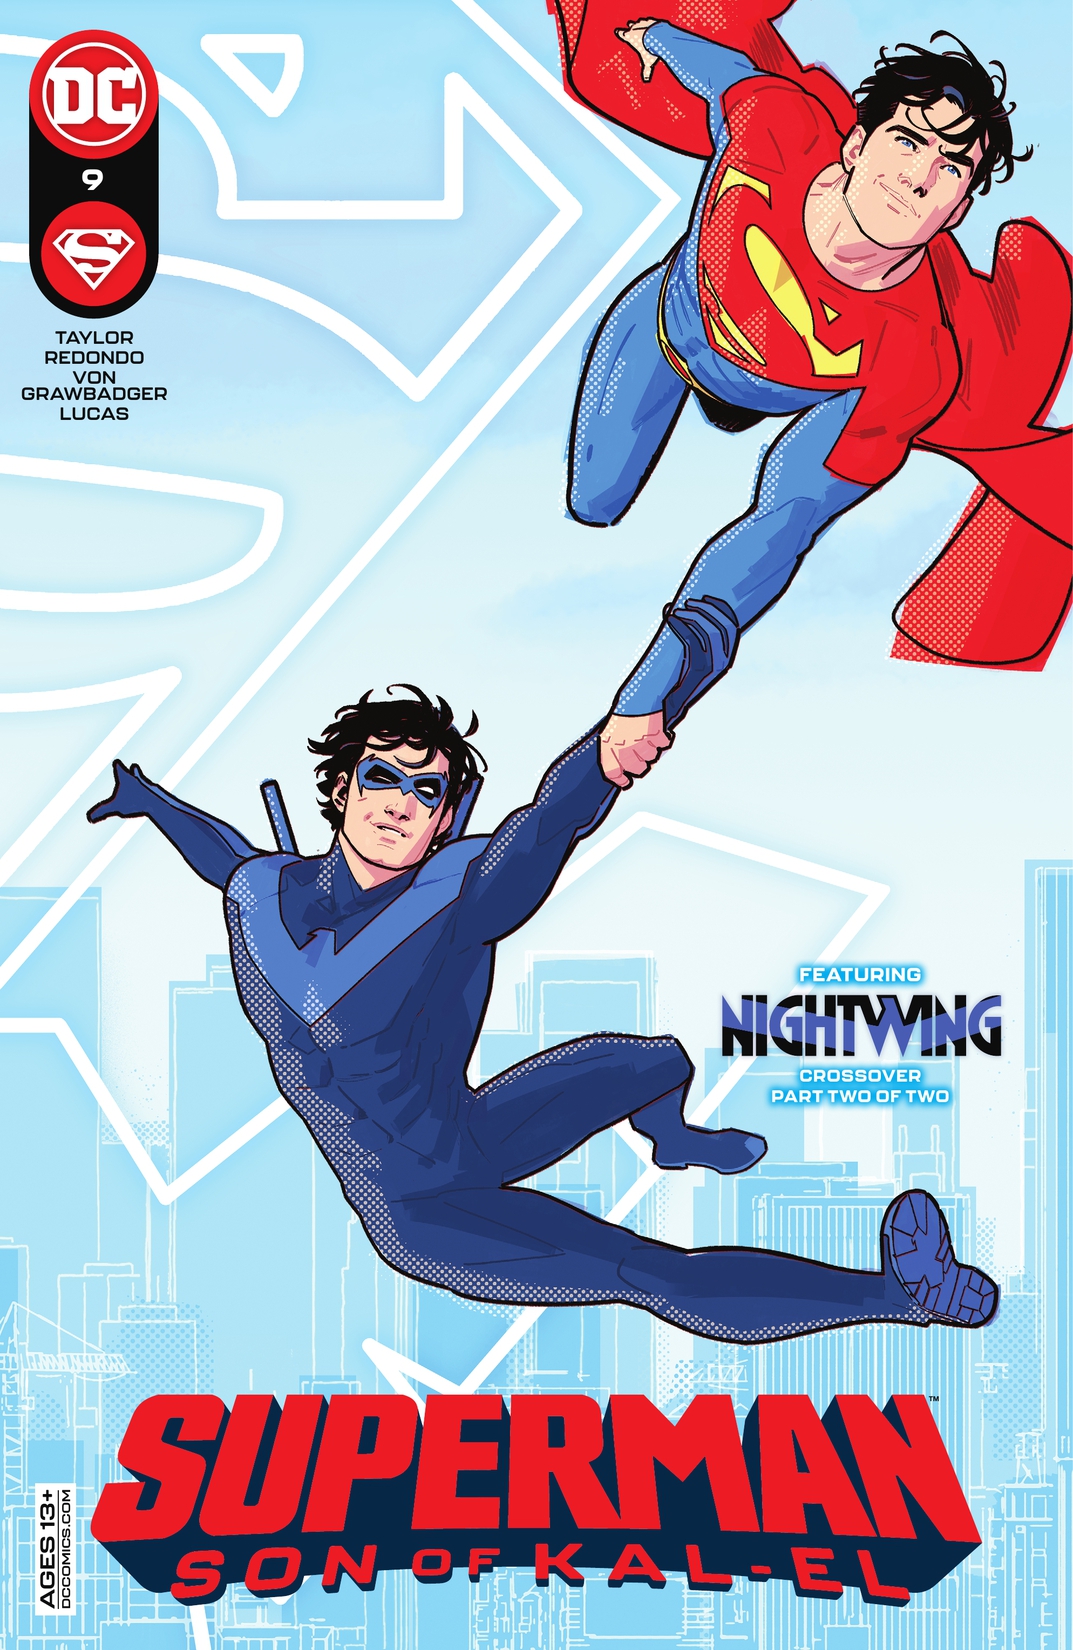 Superman: Son of Kal-El #9 preview images